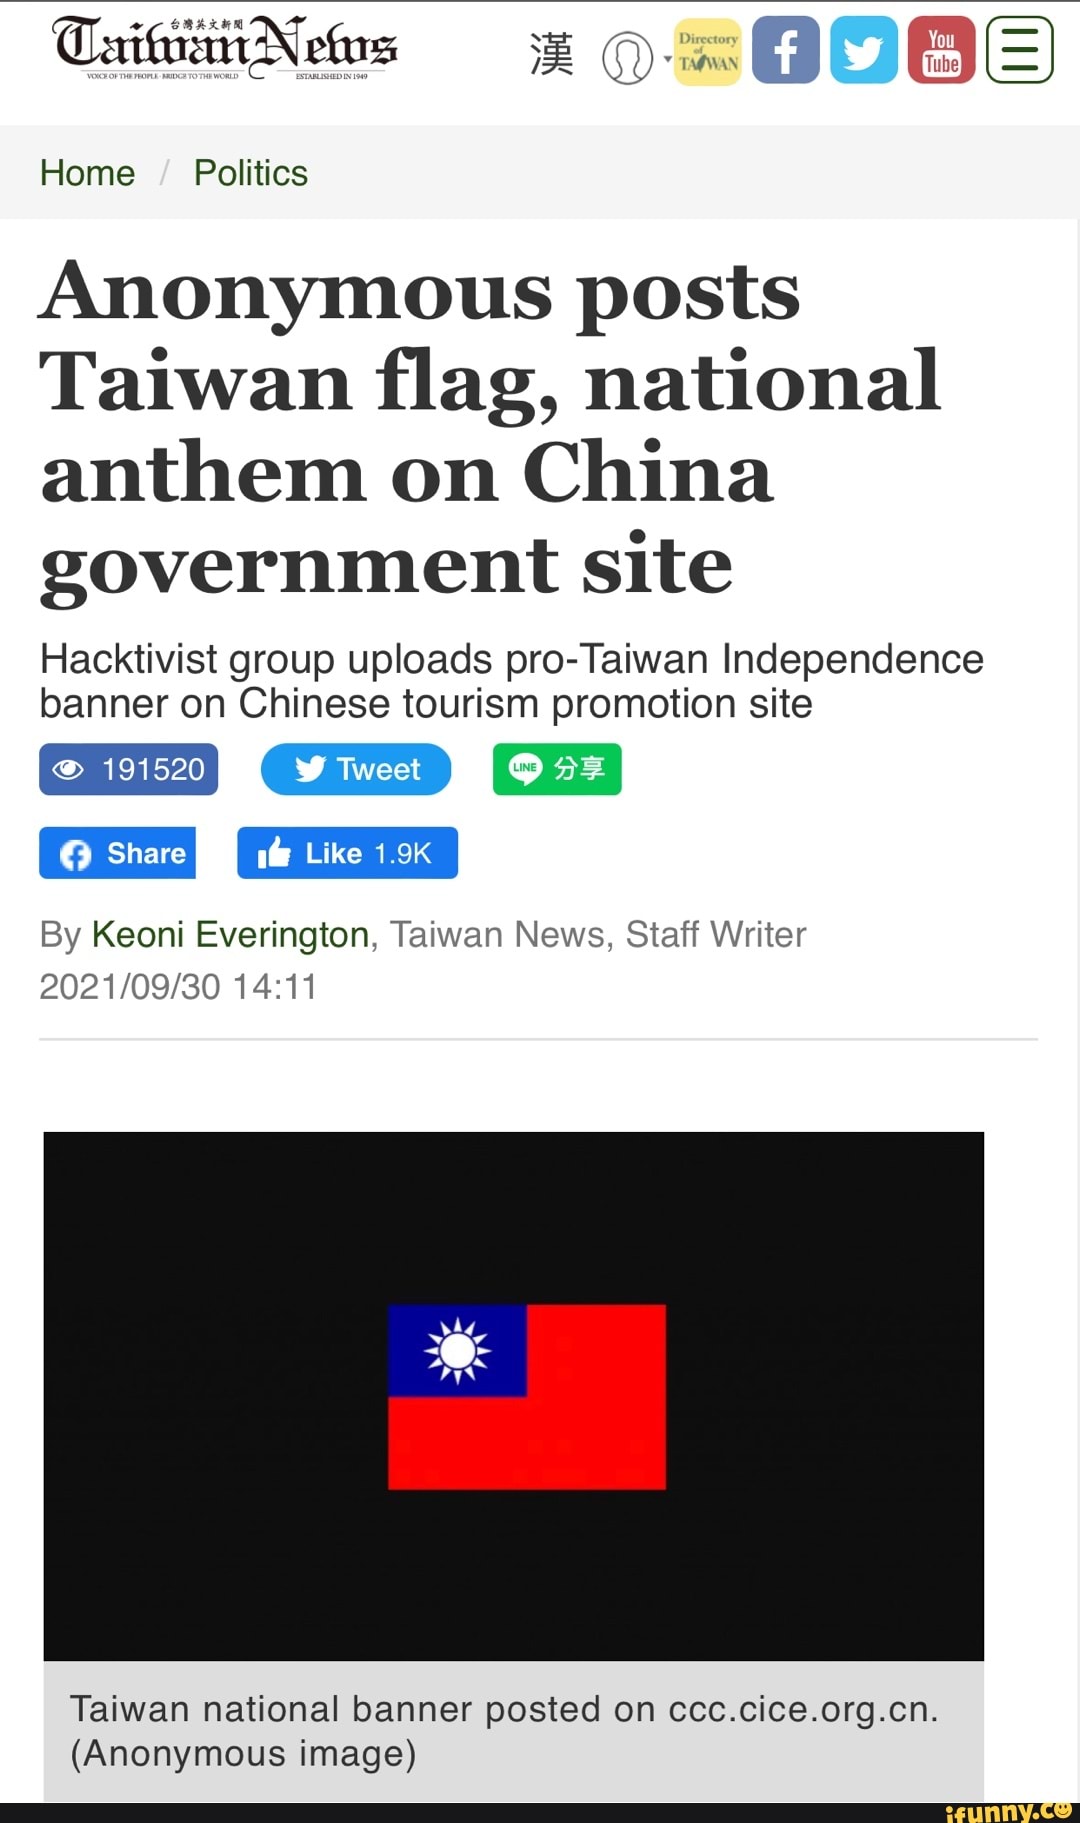 Taiwan national anthem